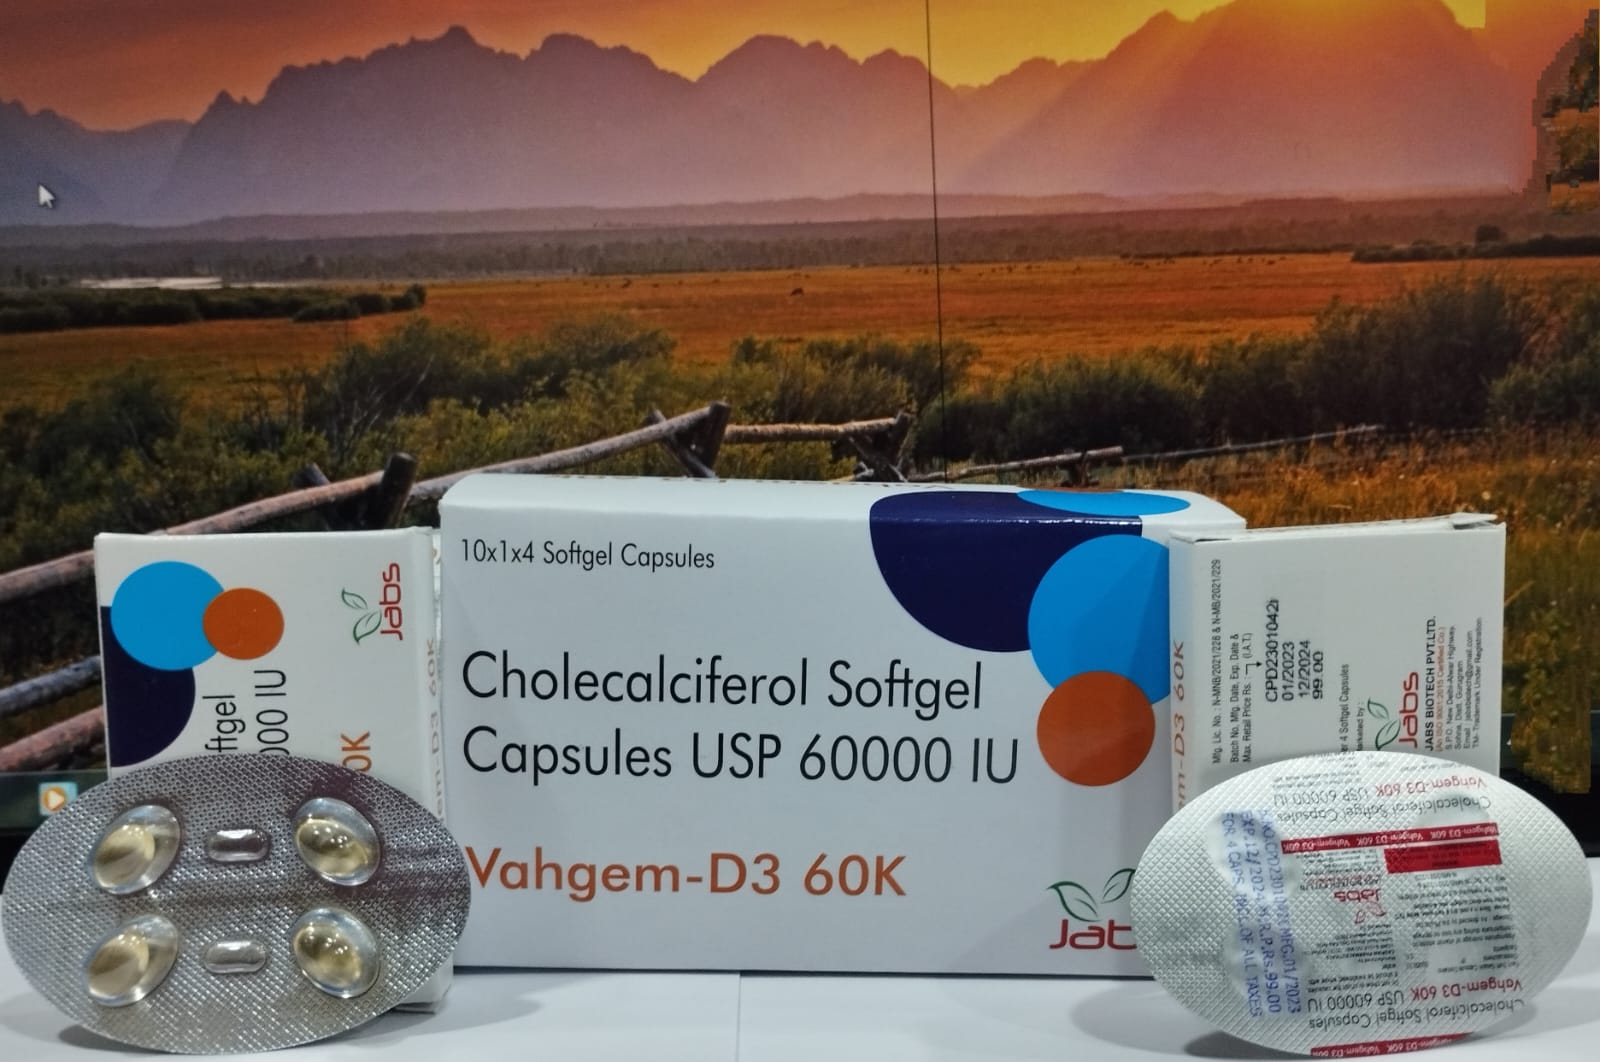 Cholecalciferol Softgel Capsules USP 60000 IU  